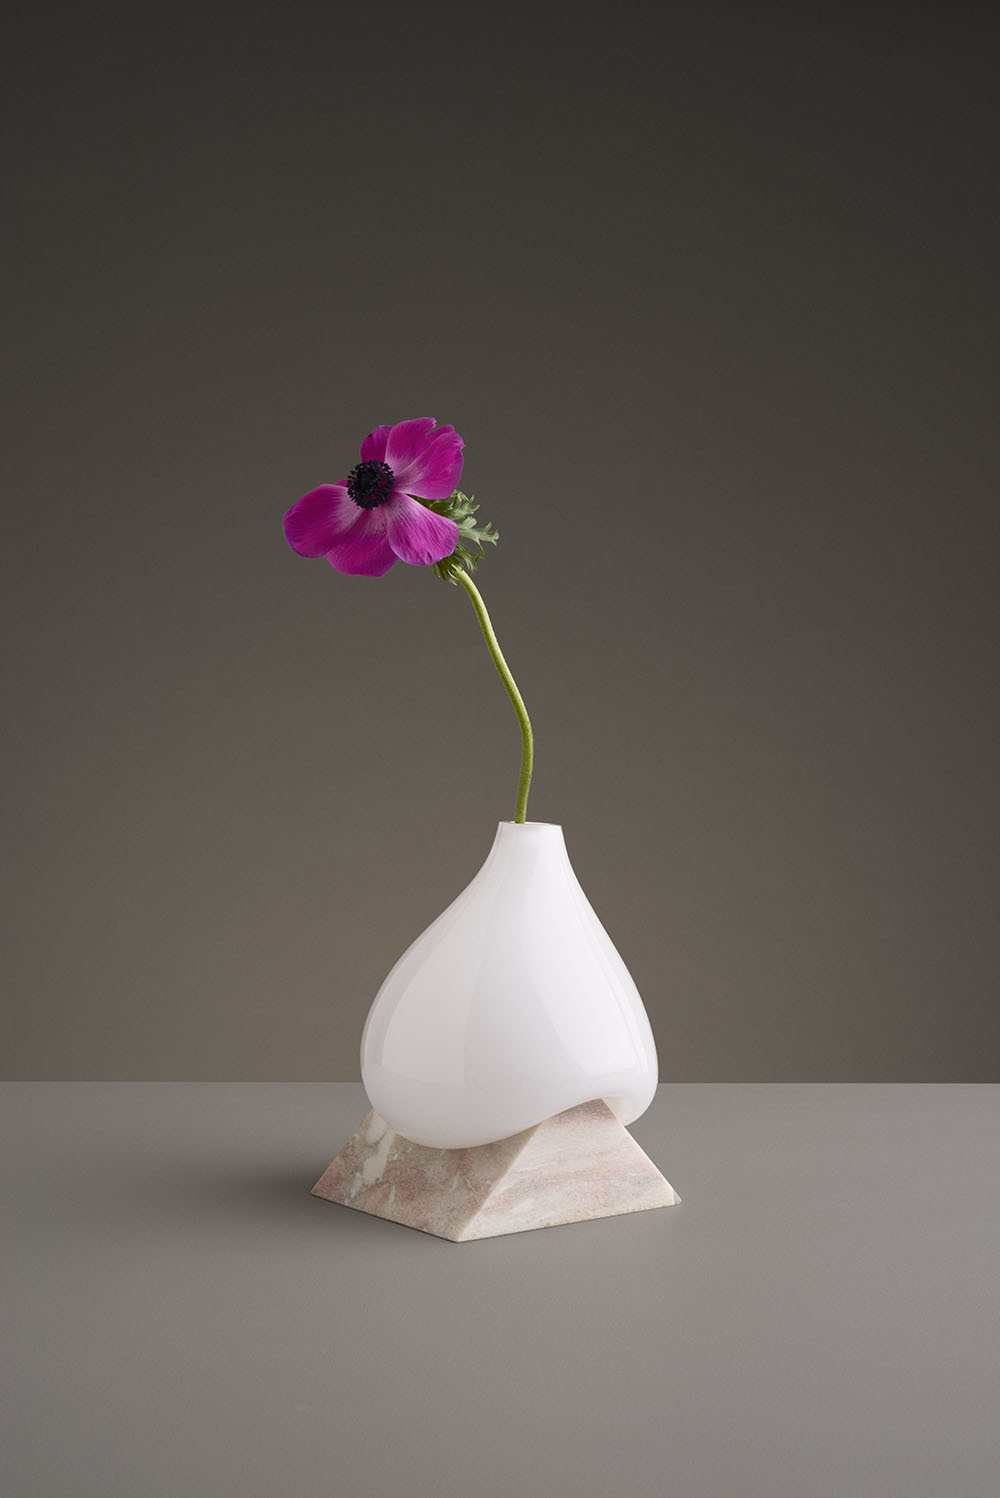 Indefinite Vases by Studio E.O.